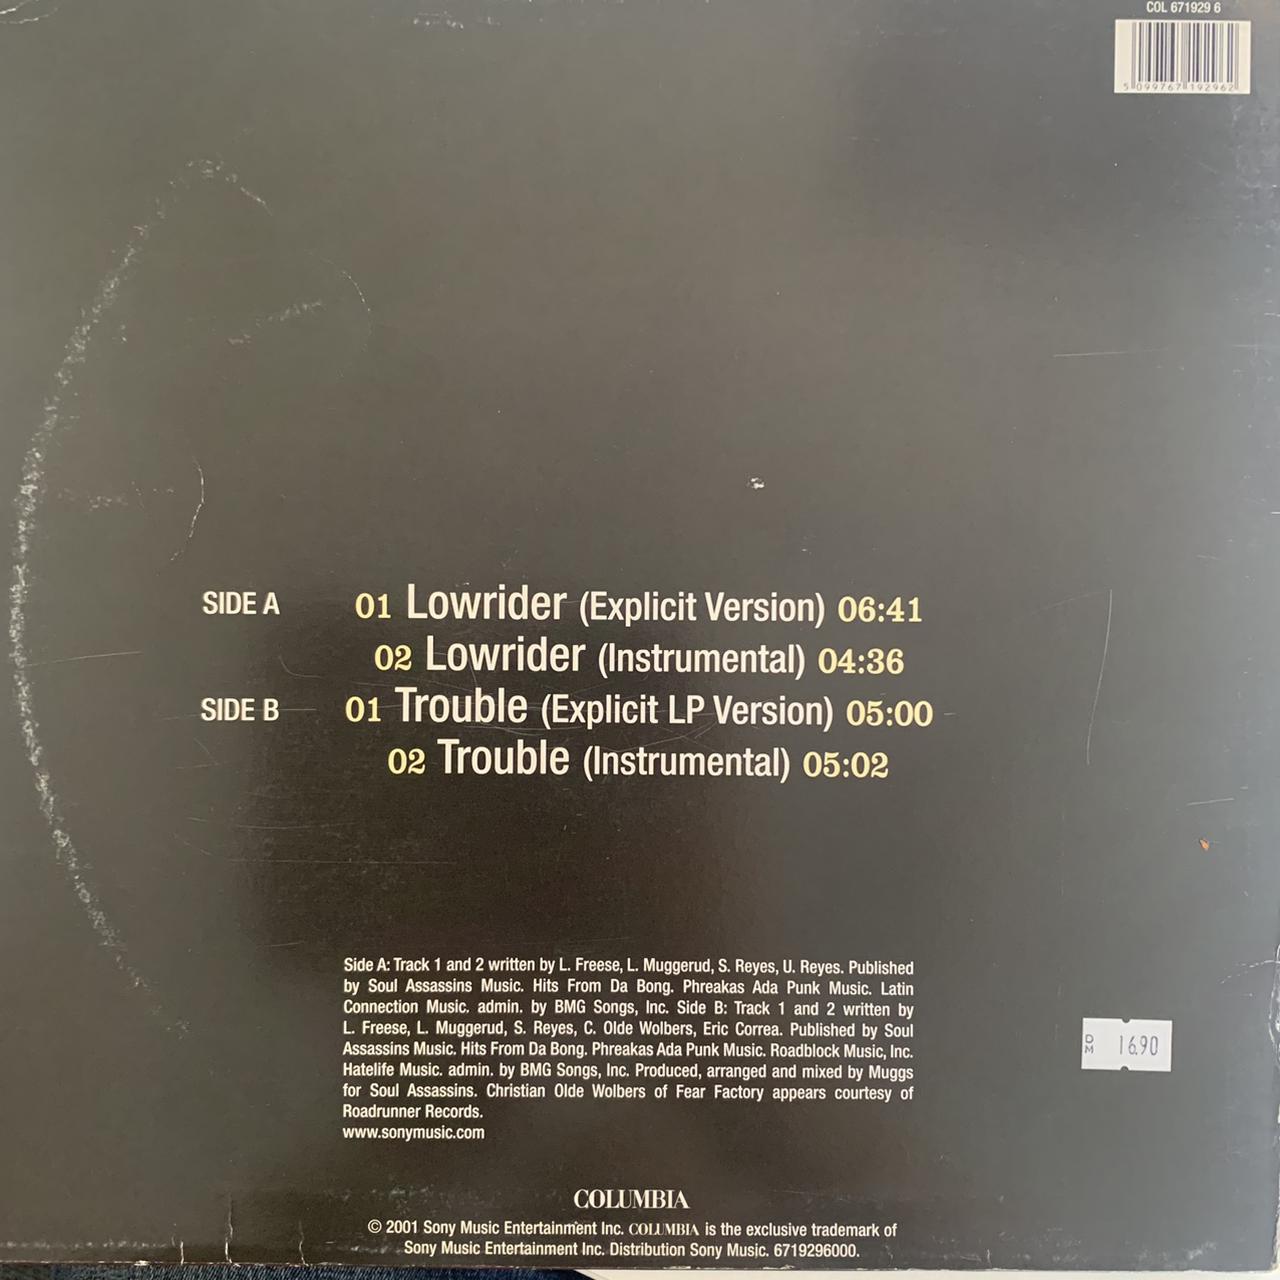 Cypress Hill “Lowrider” / “Trouble” 4 Version 12inch Vinyl